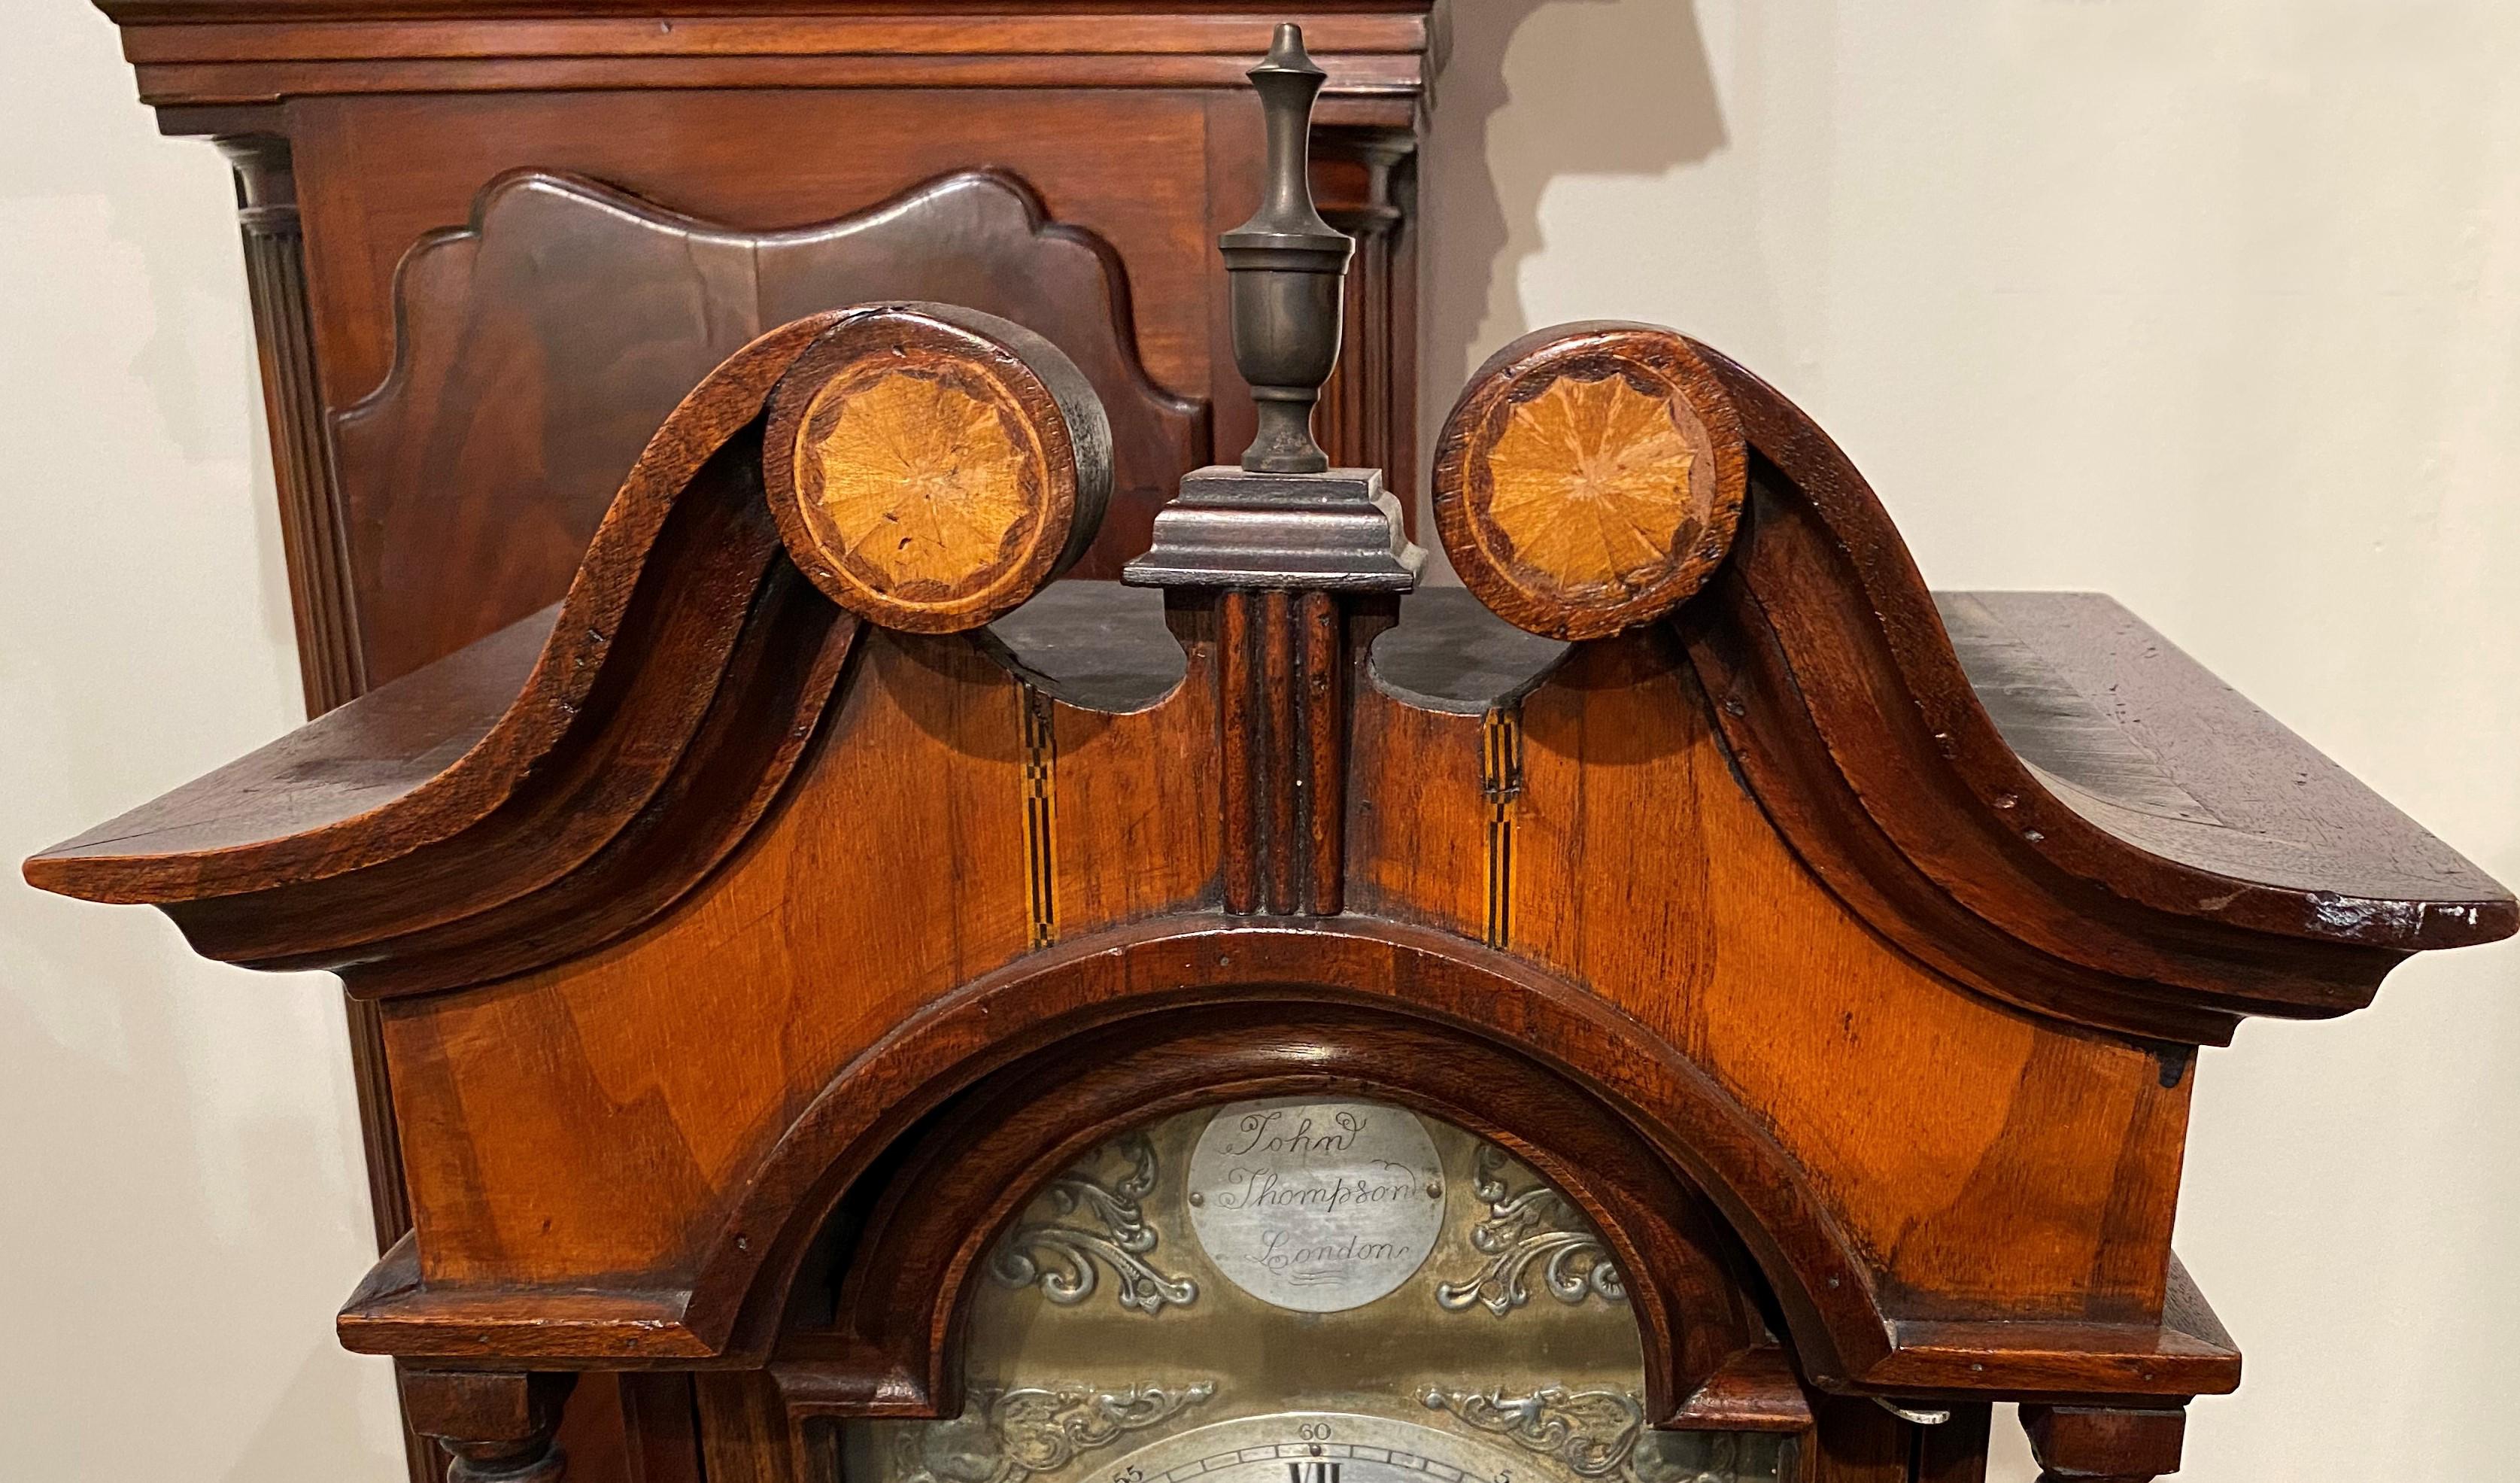 grandmother clock vs grandfather clock